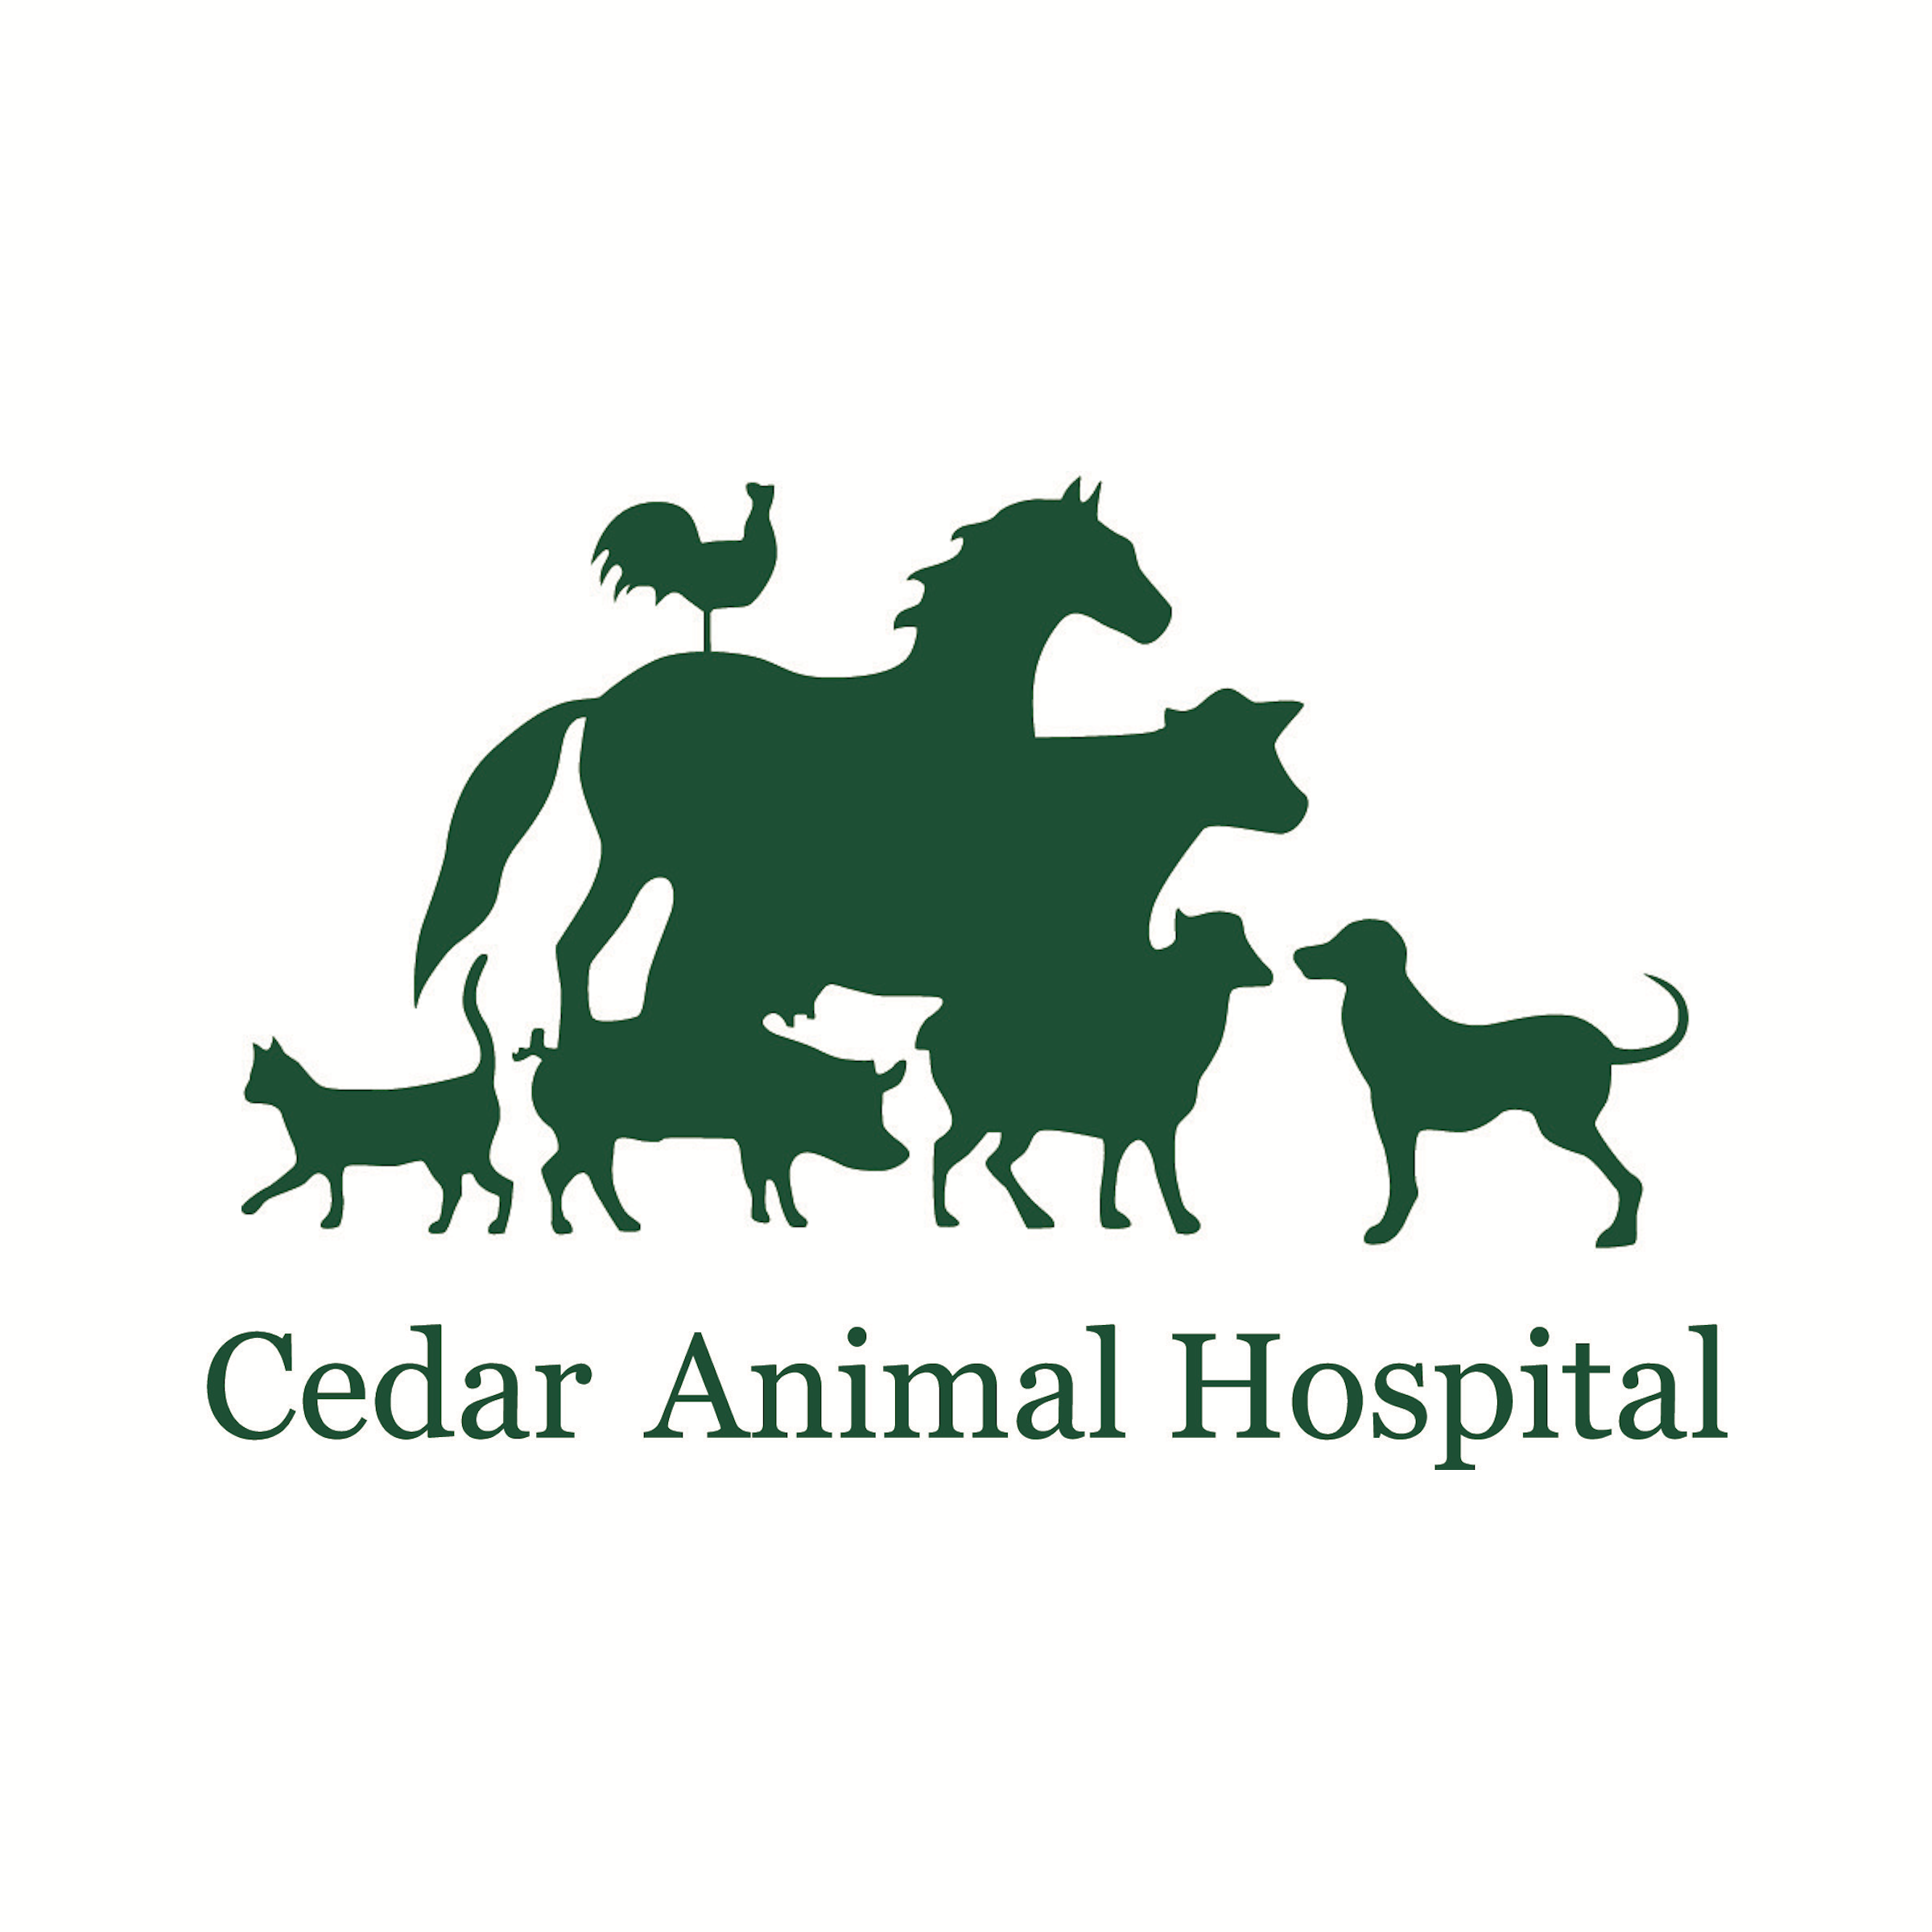 Cedar Animal Hospital